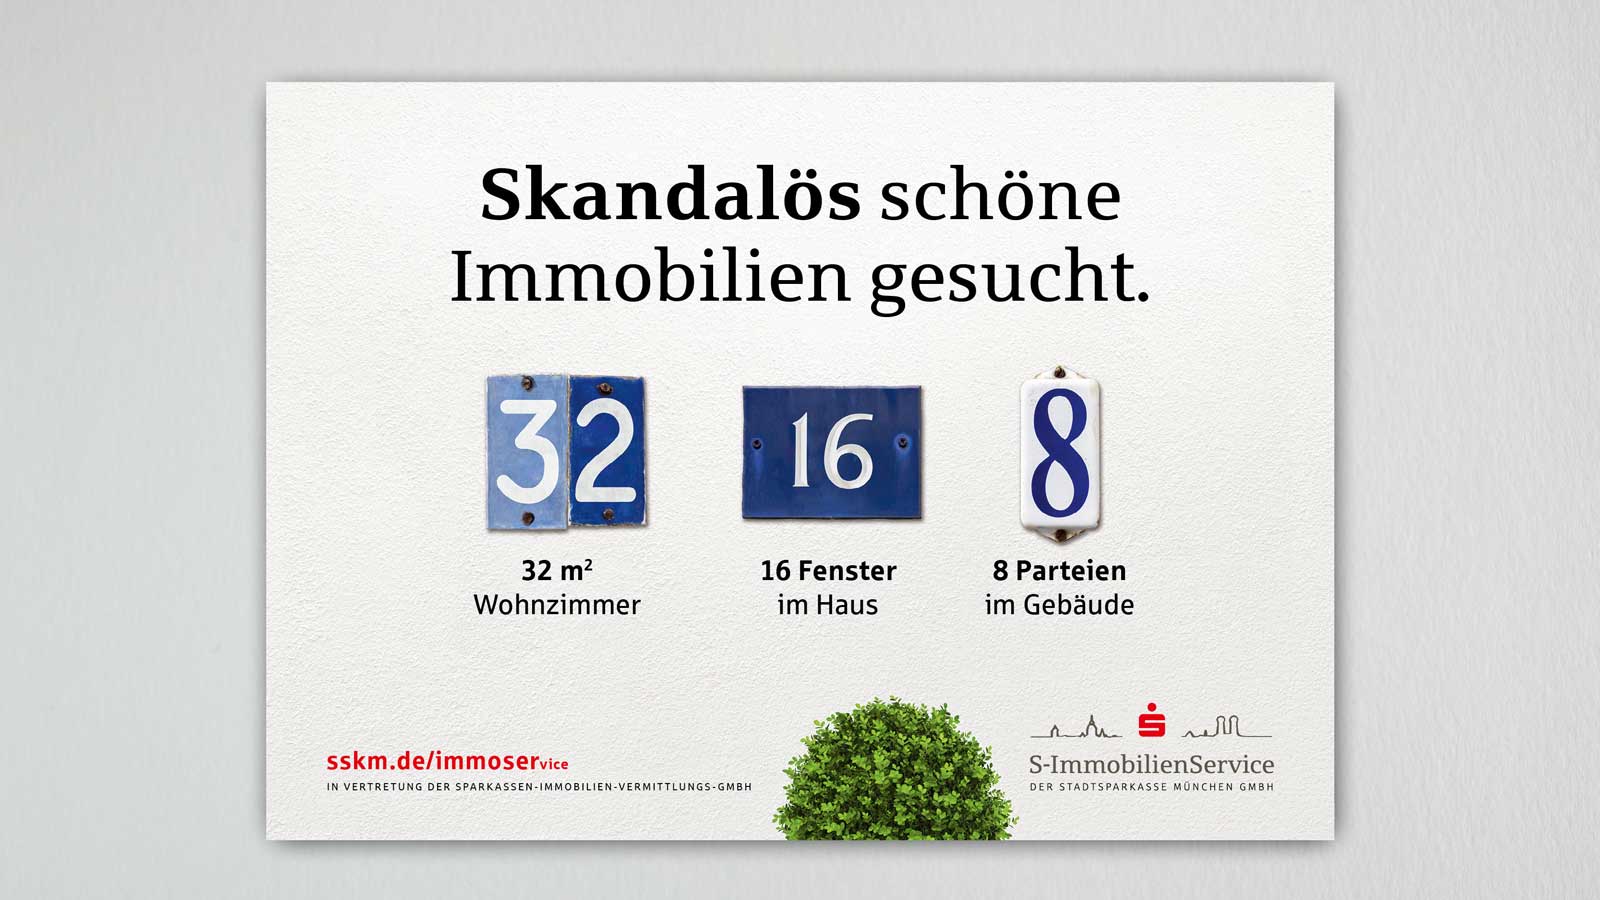 Imagekampagne S-Immobilienservice der Stadtsparkasse München